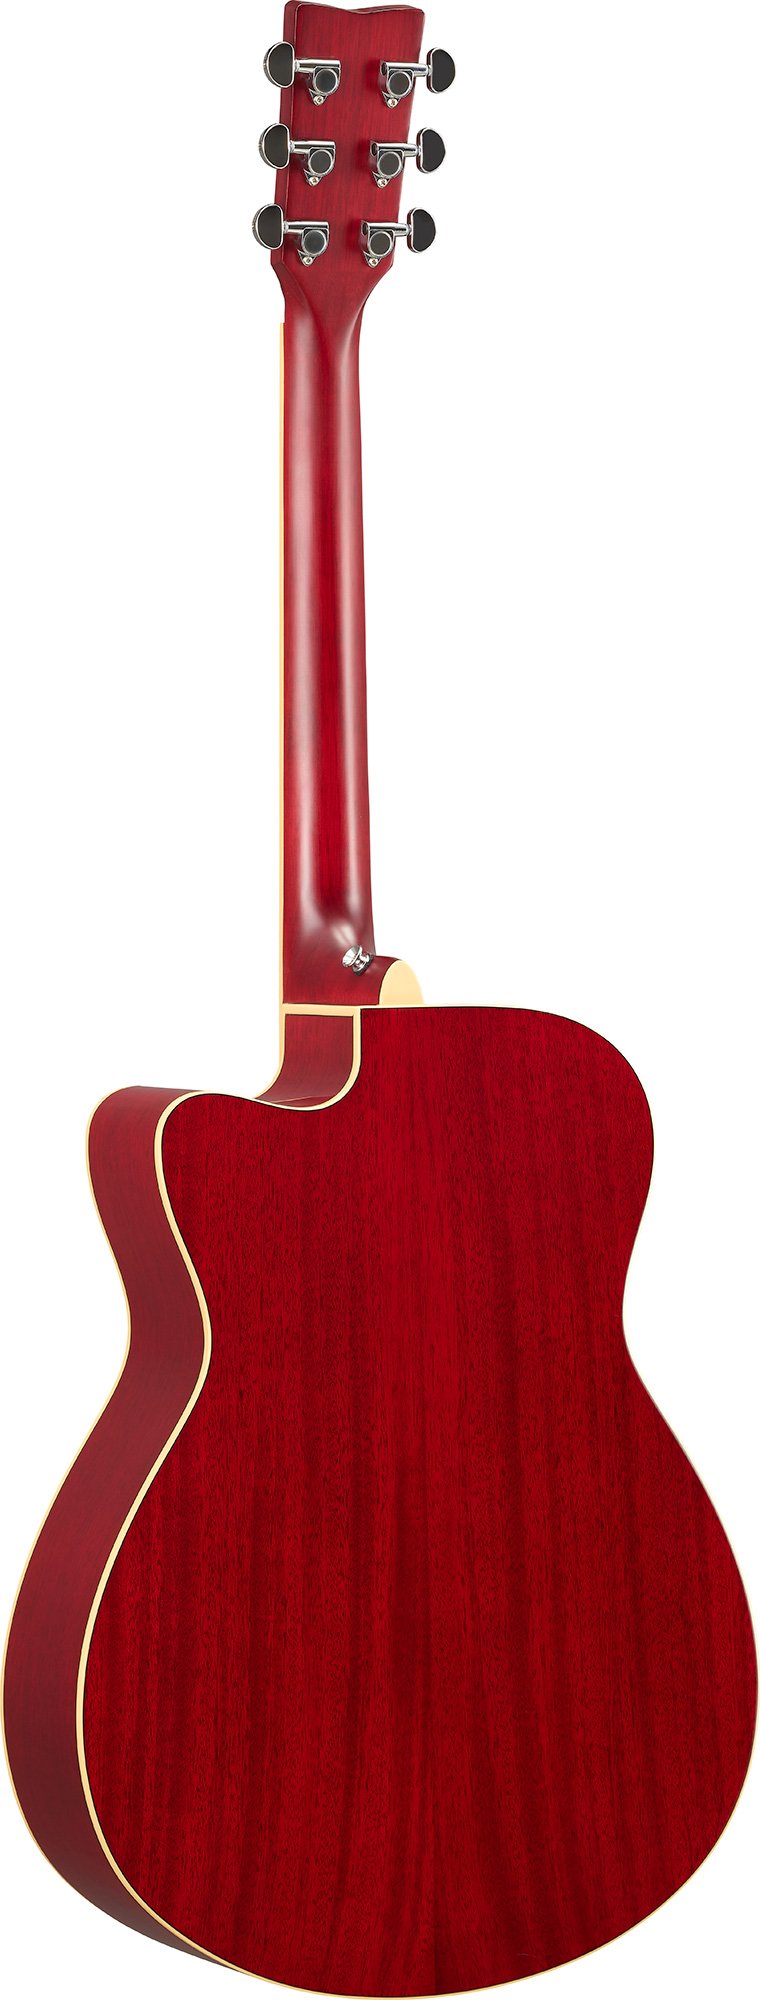 Yamaha Fsc-ta Transacoustic Cutaway Epicea Acajou Rw - Ruby Red - Guitarra acústica & electro - Variation 1